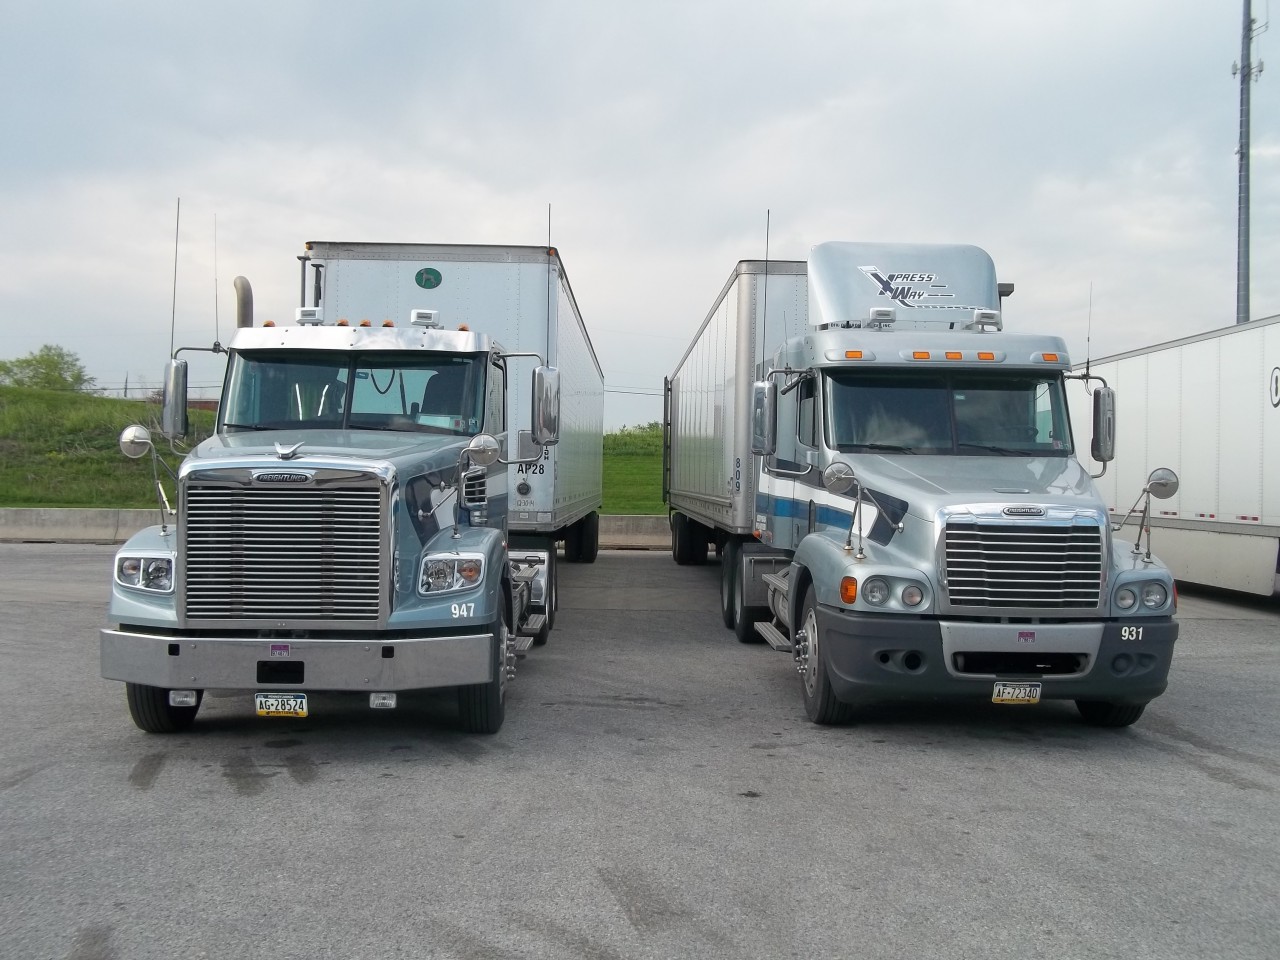 Dualing trucks